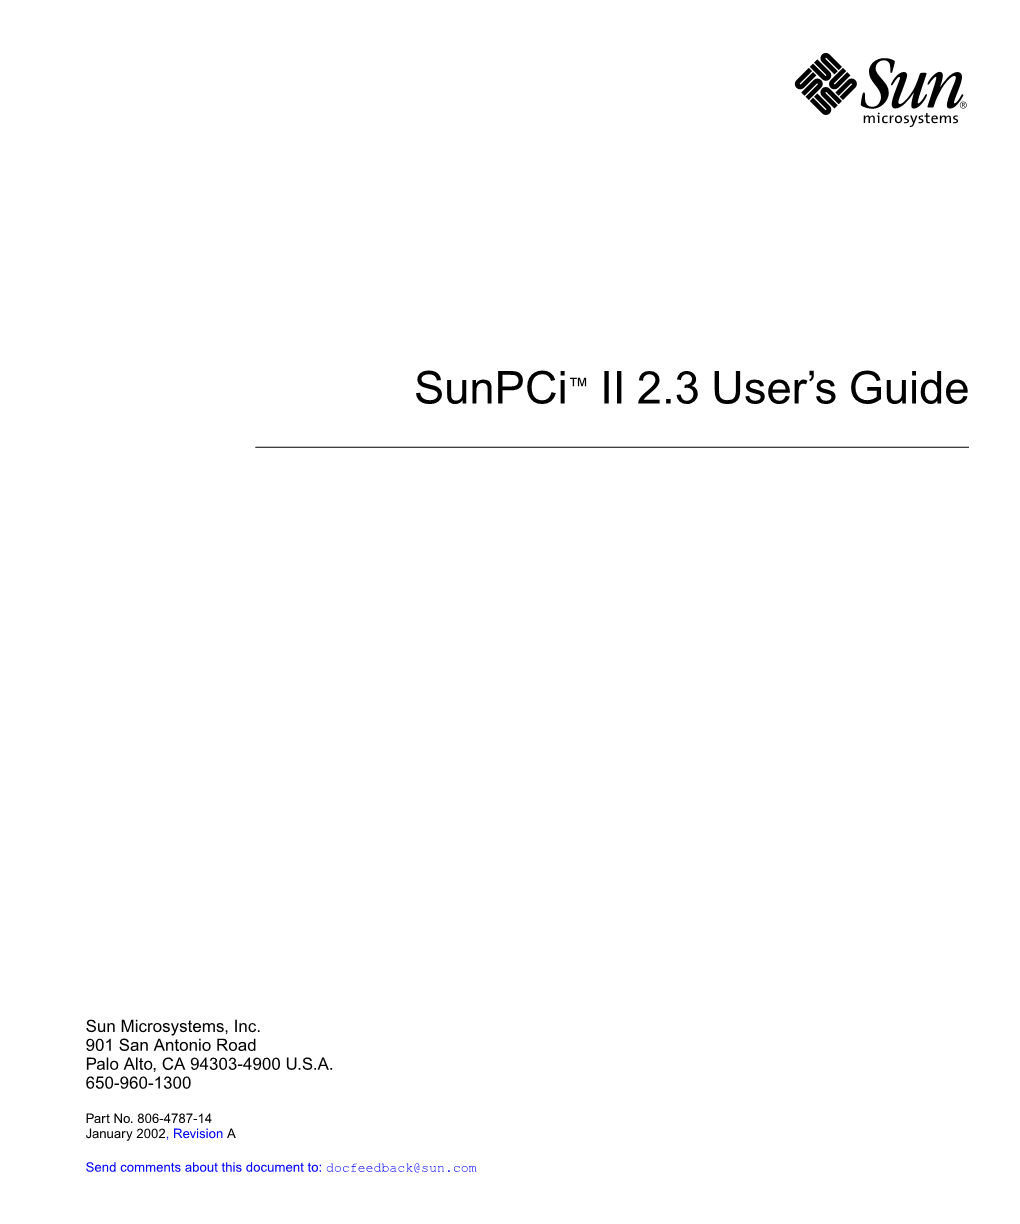 Sunpci II 2.3 User's Guide